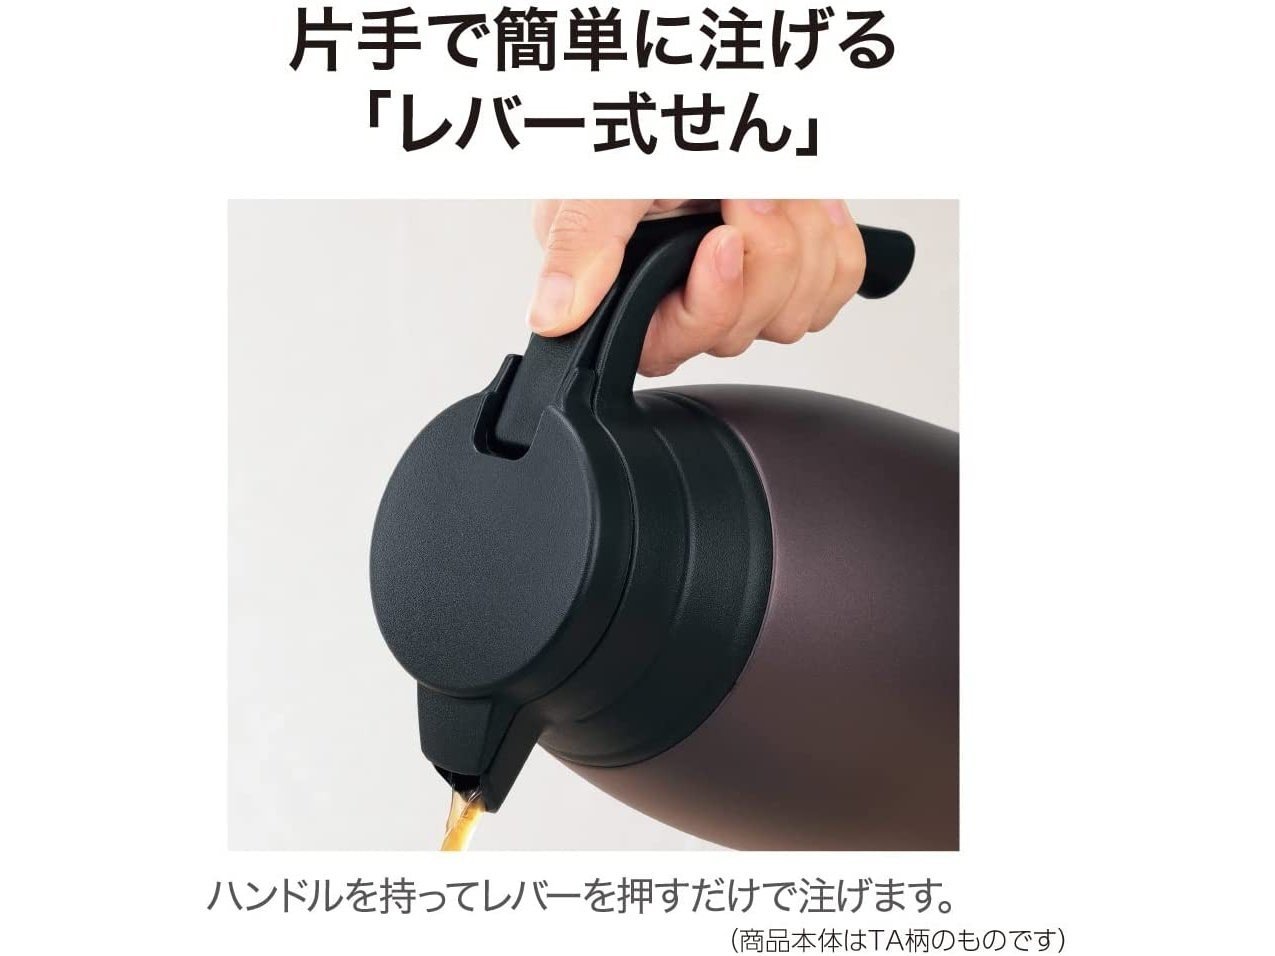 ZOJIRUSHI SH-RA Stainless Steel Vacuum Carafe